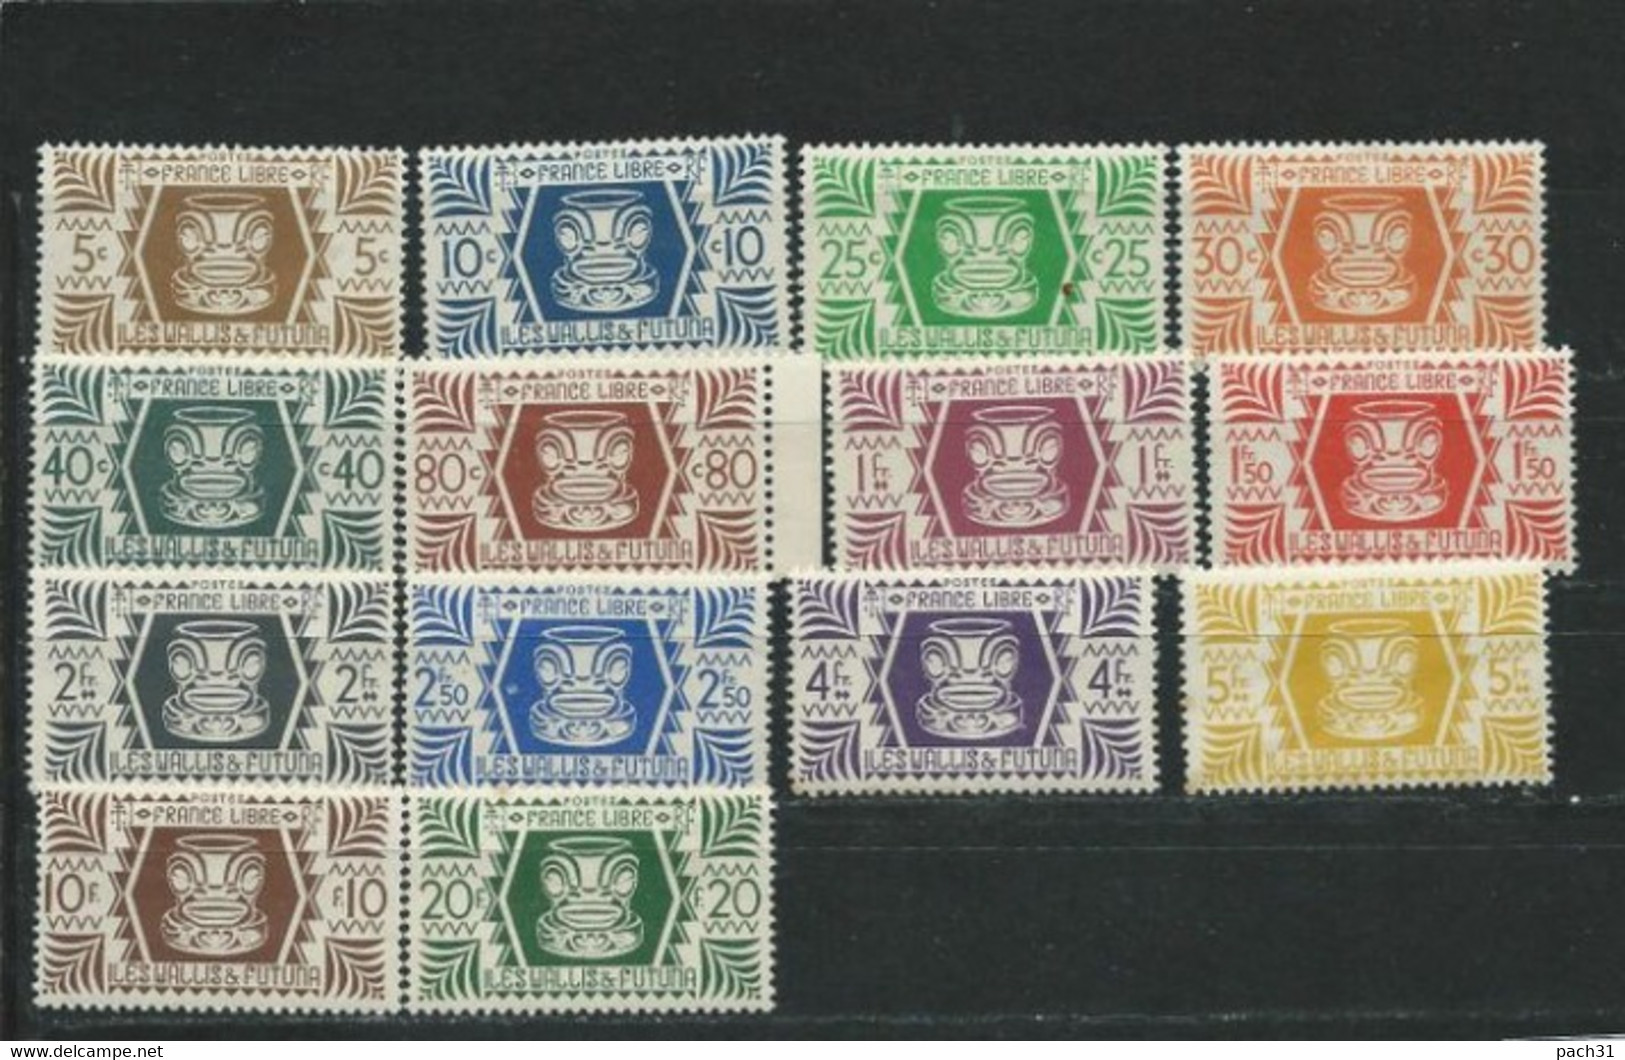 Wallis Et Futuna   N° YT 133 à 146 Neufs - Collections, Lots & Series